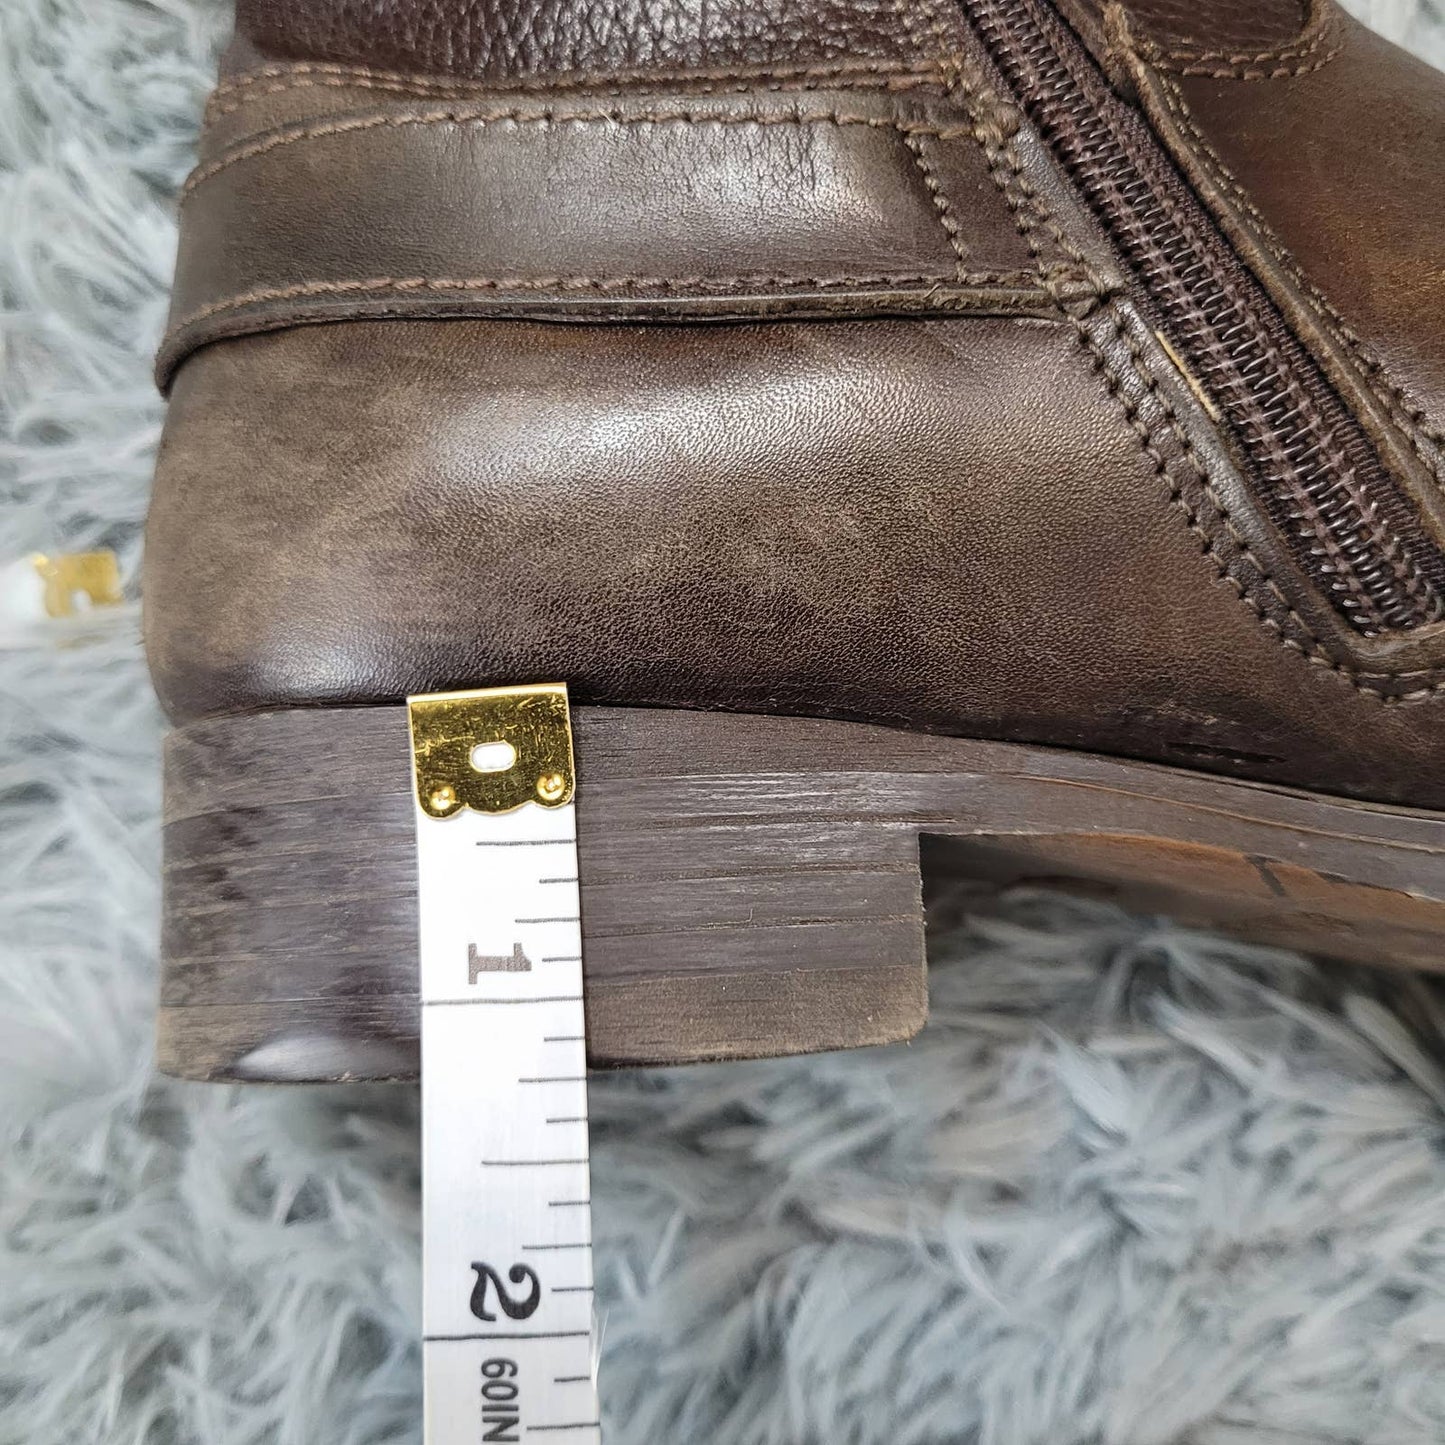 Aldo Brown Leather Boots - Size 7Markita's ClosetAldo